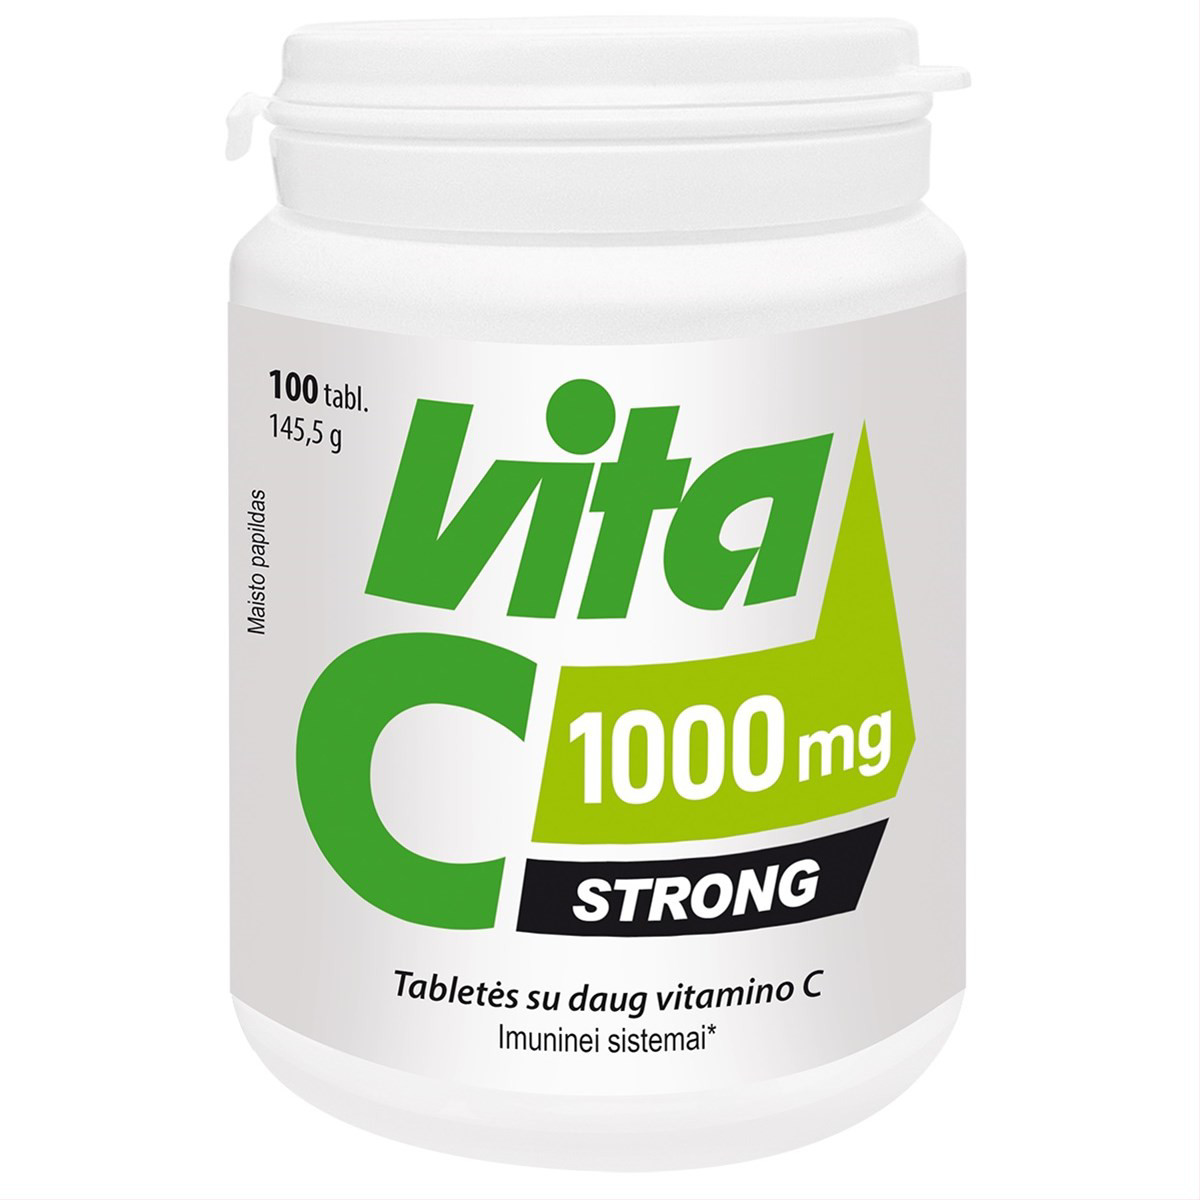 VITA C STRONG 1000mg,100 tablečių